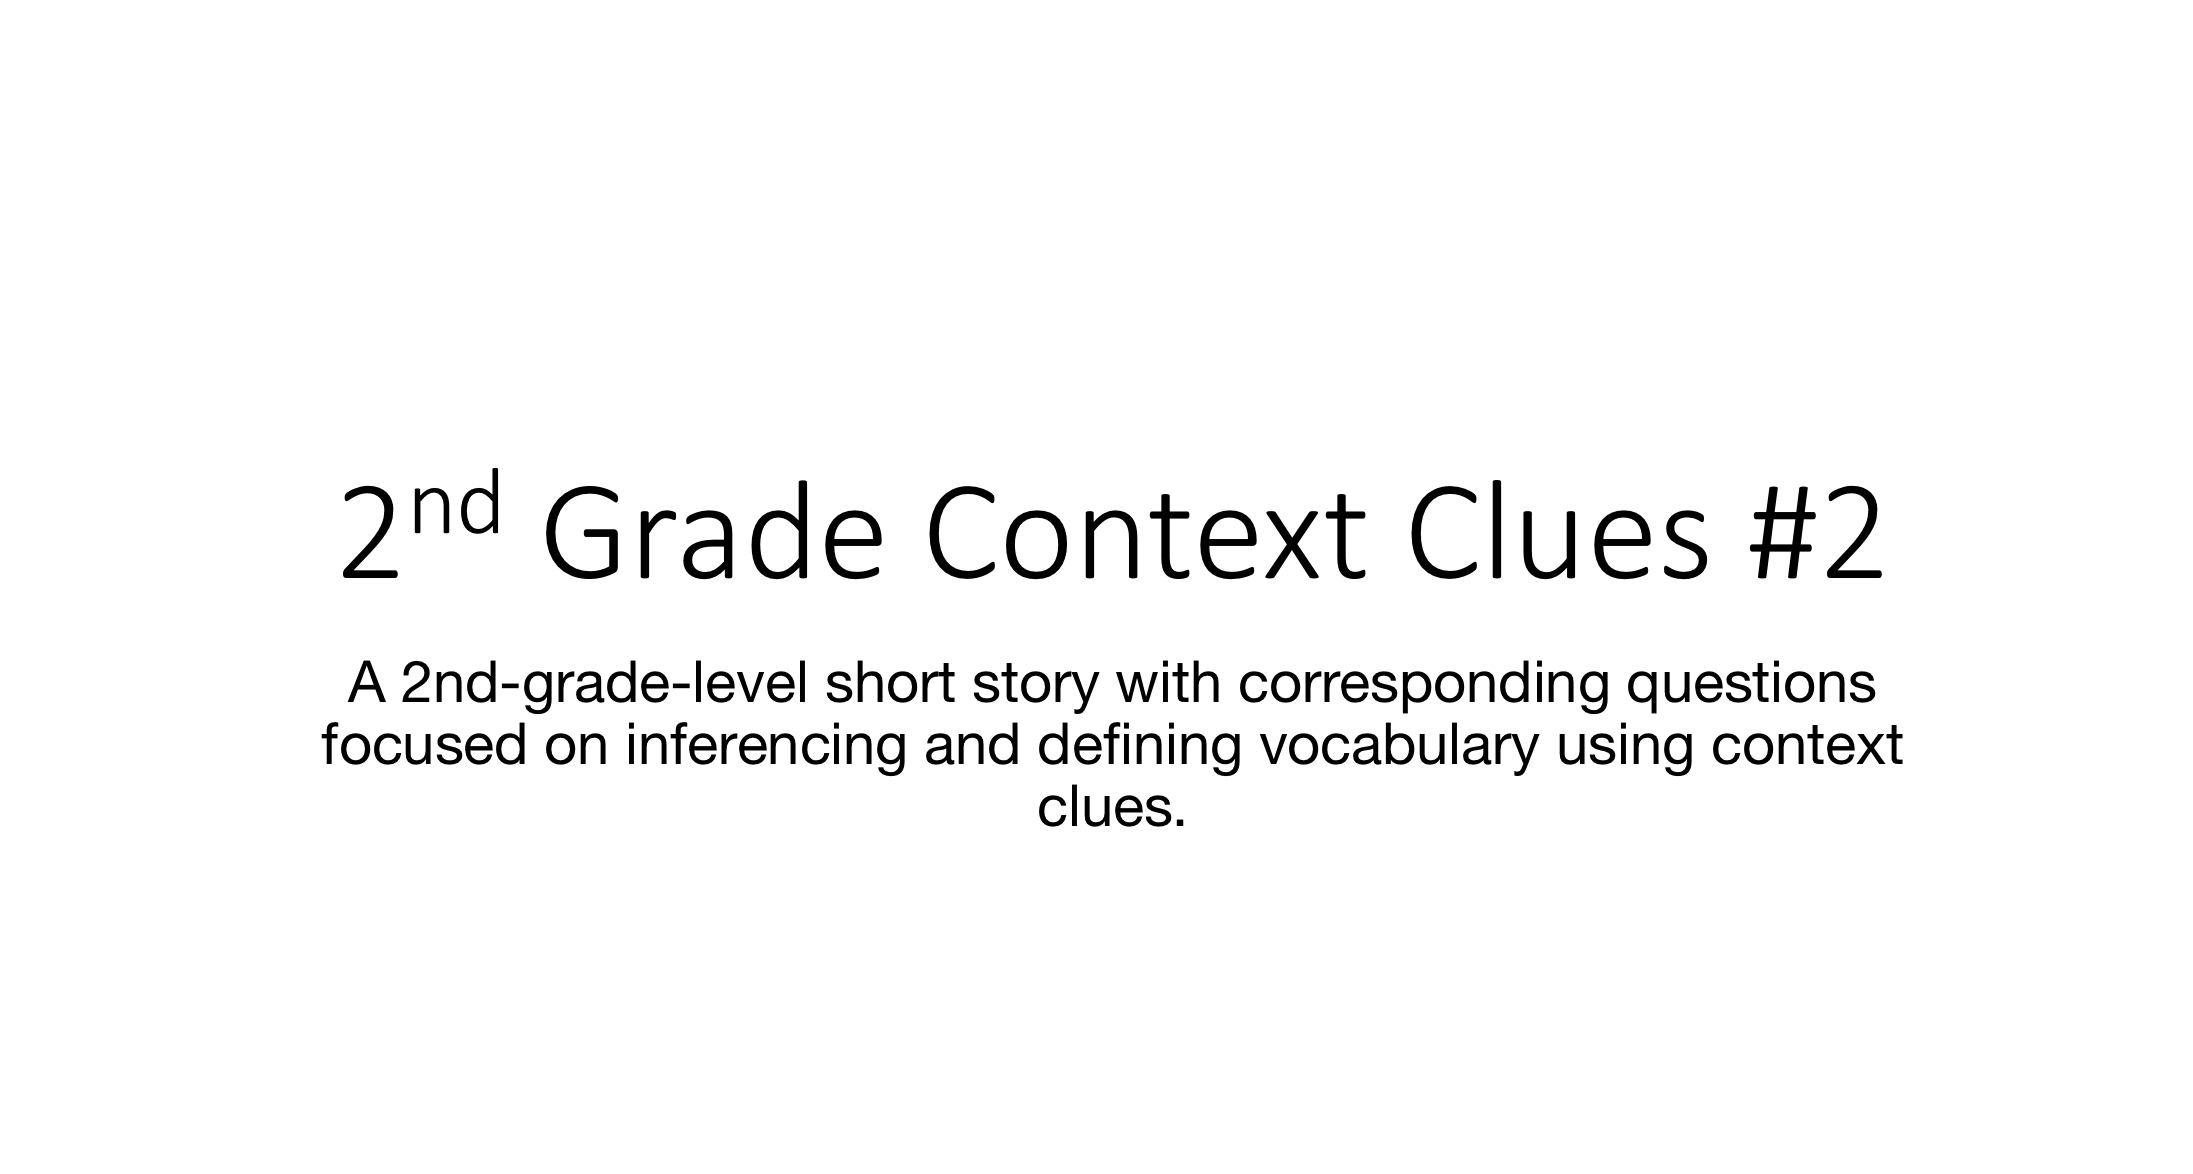 2nd Grade Context Clues #2 image